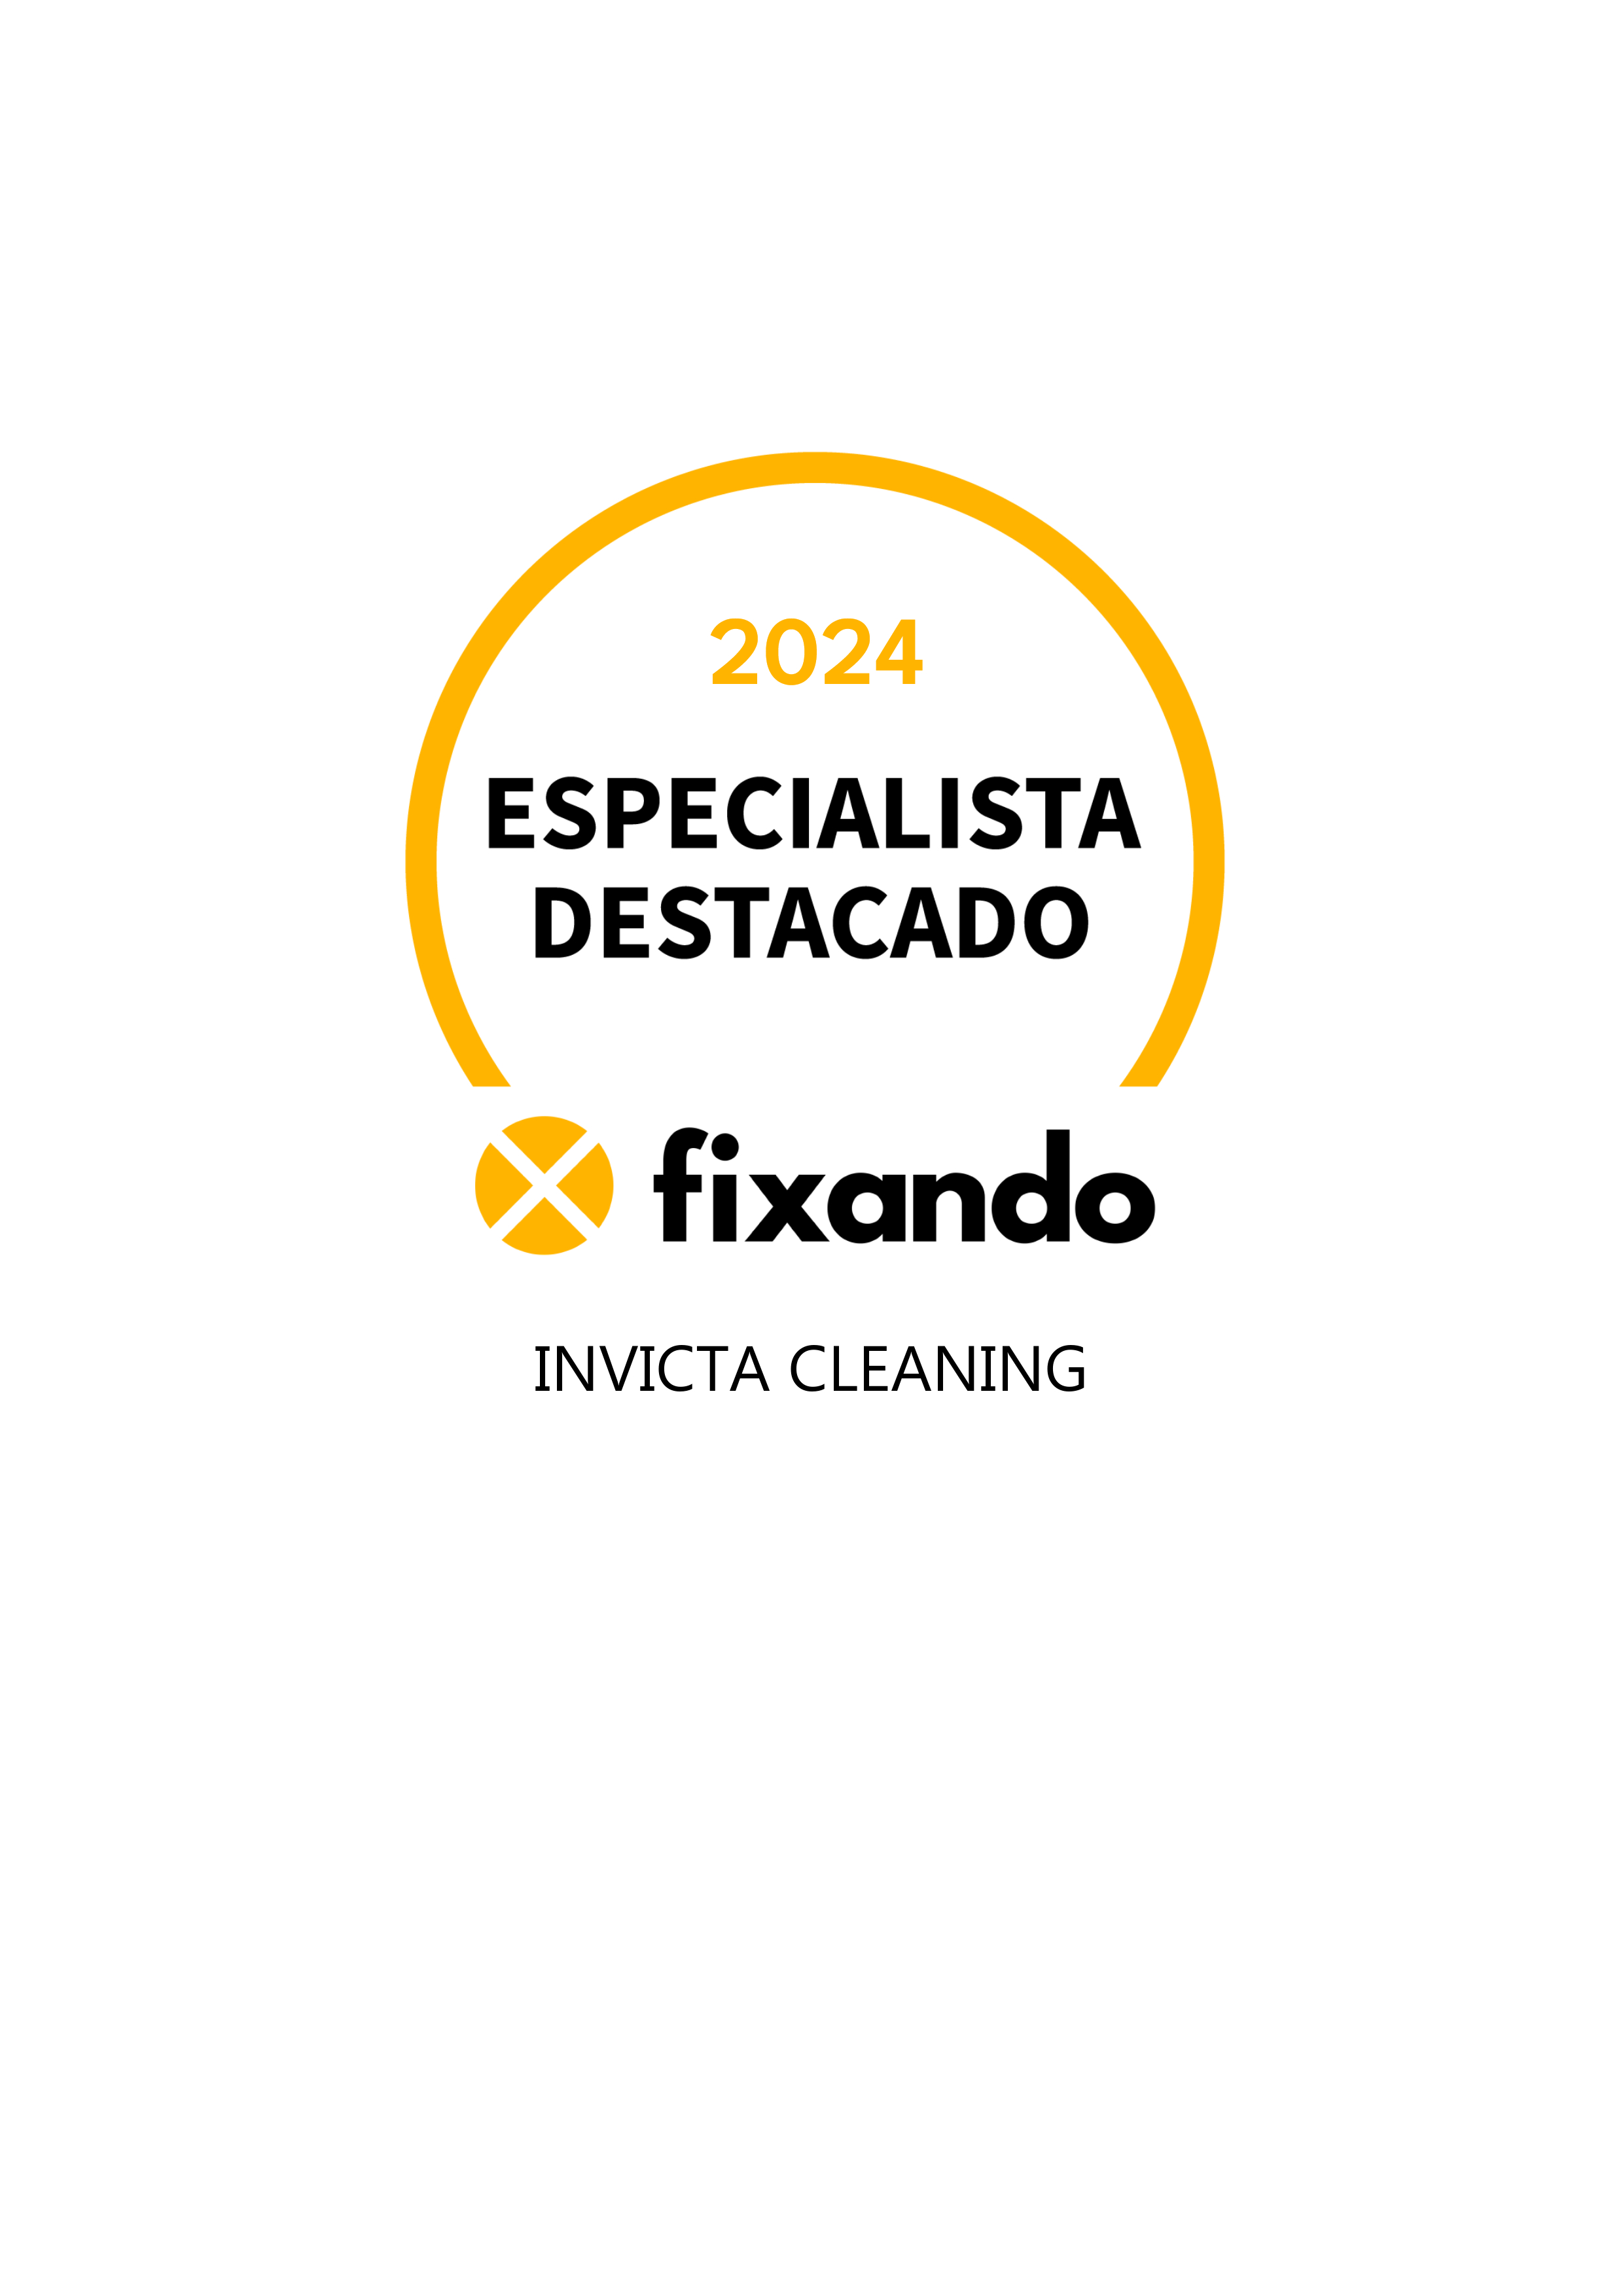 Invicta cleaning - Lisboa - Limpeza a Fundo